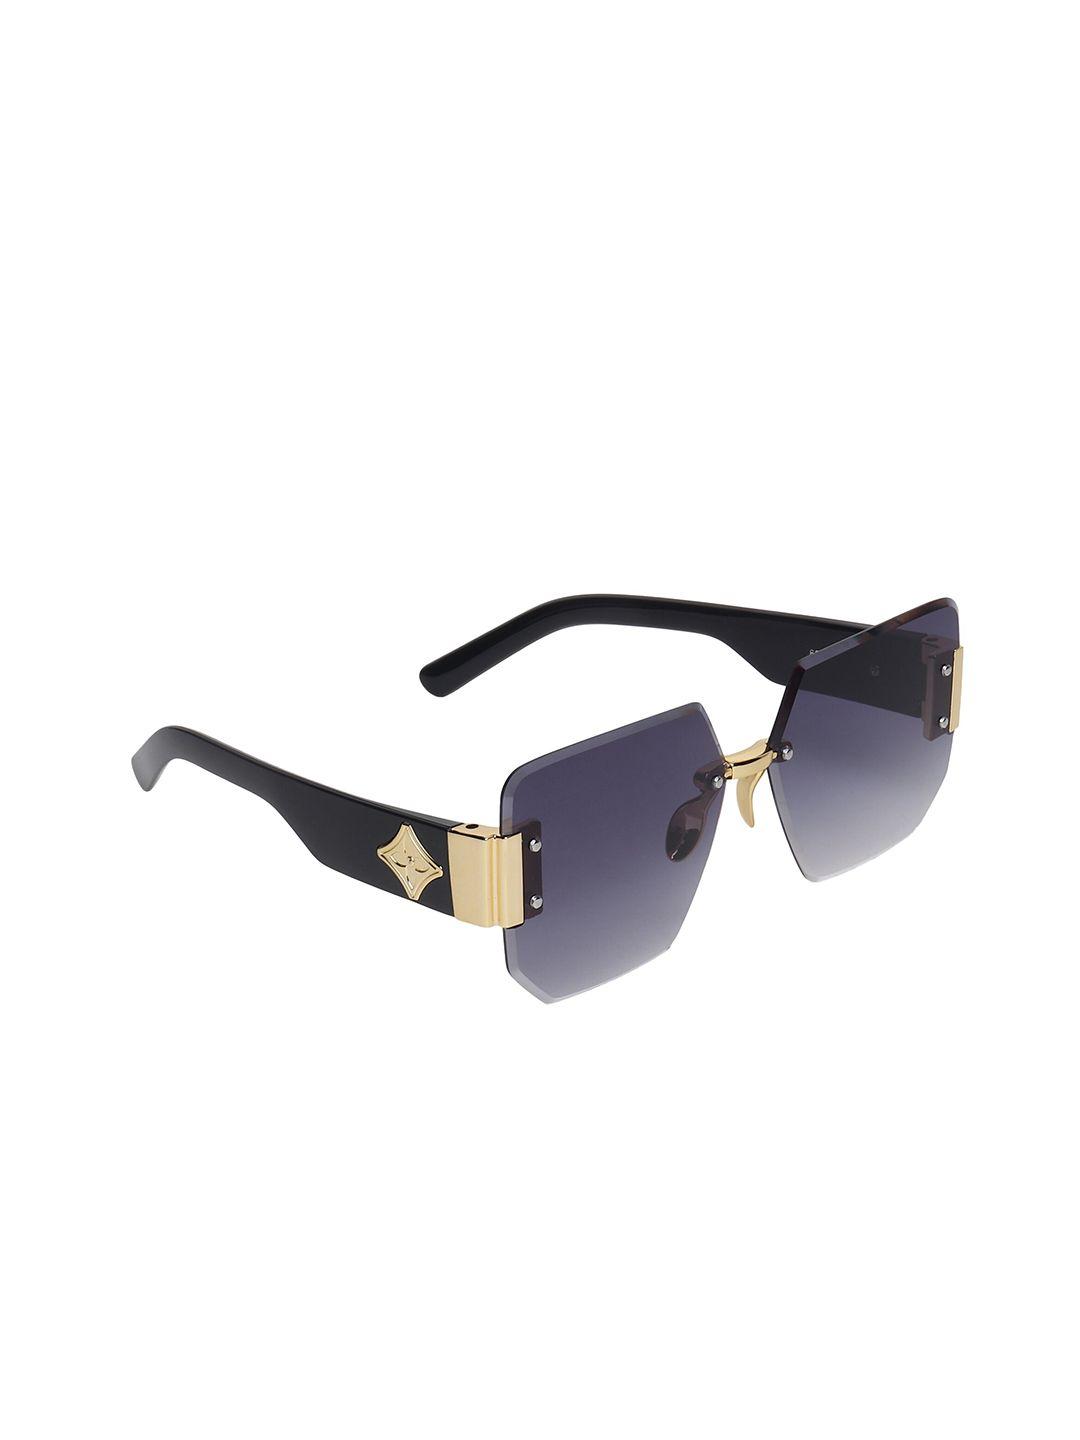 swiss design oversized sunglasses with uv protected lens sdsg-619-08